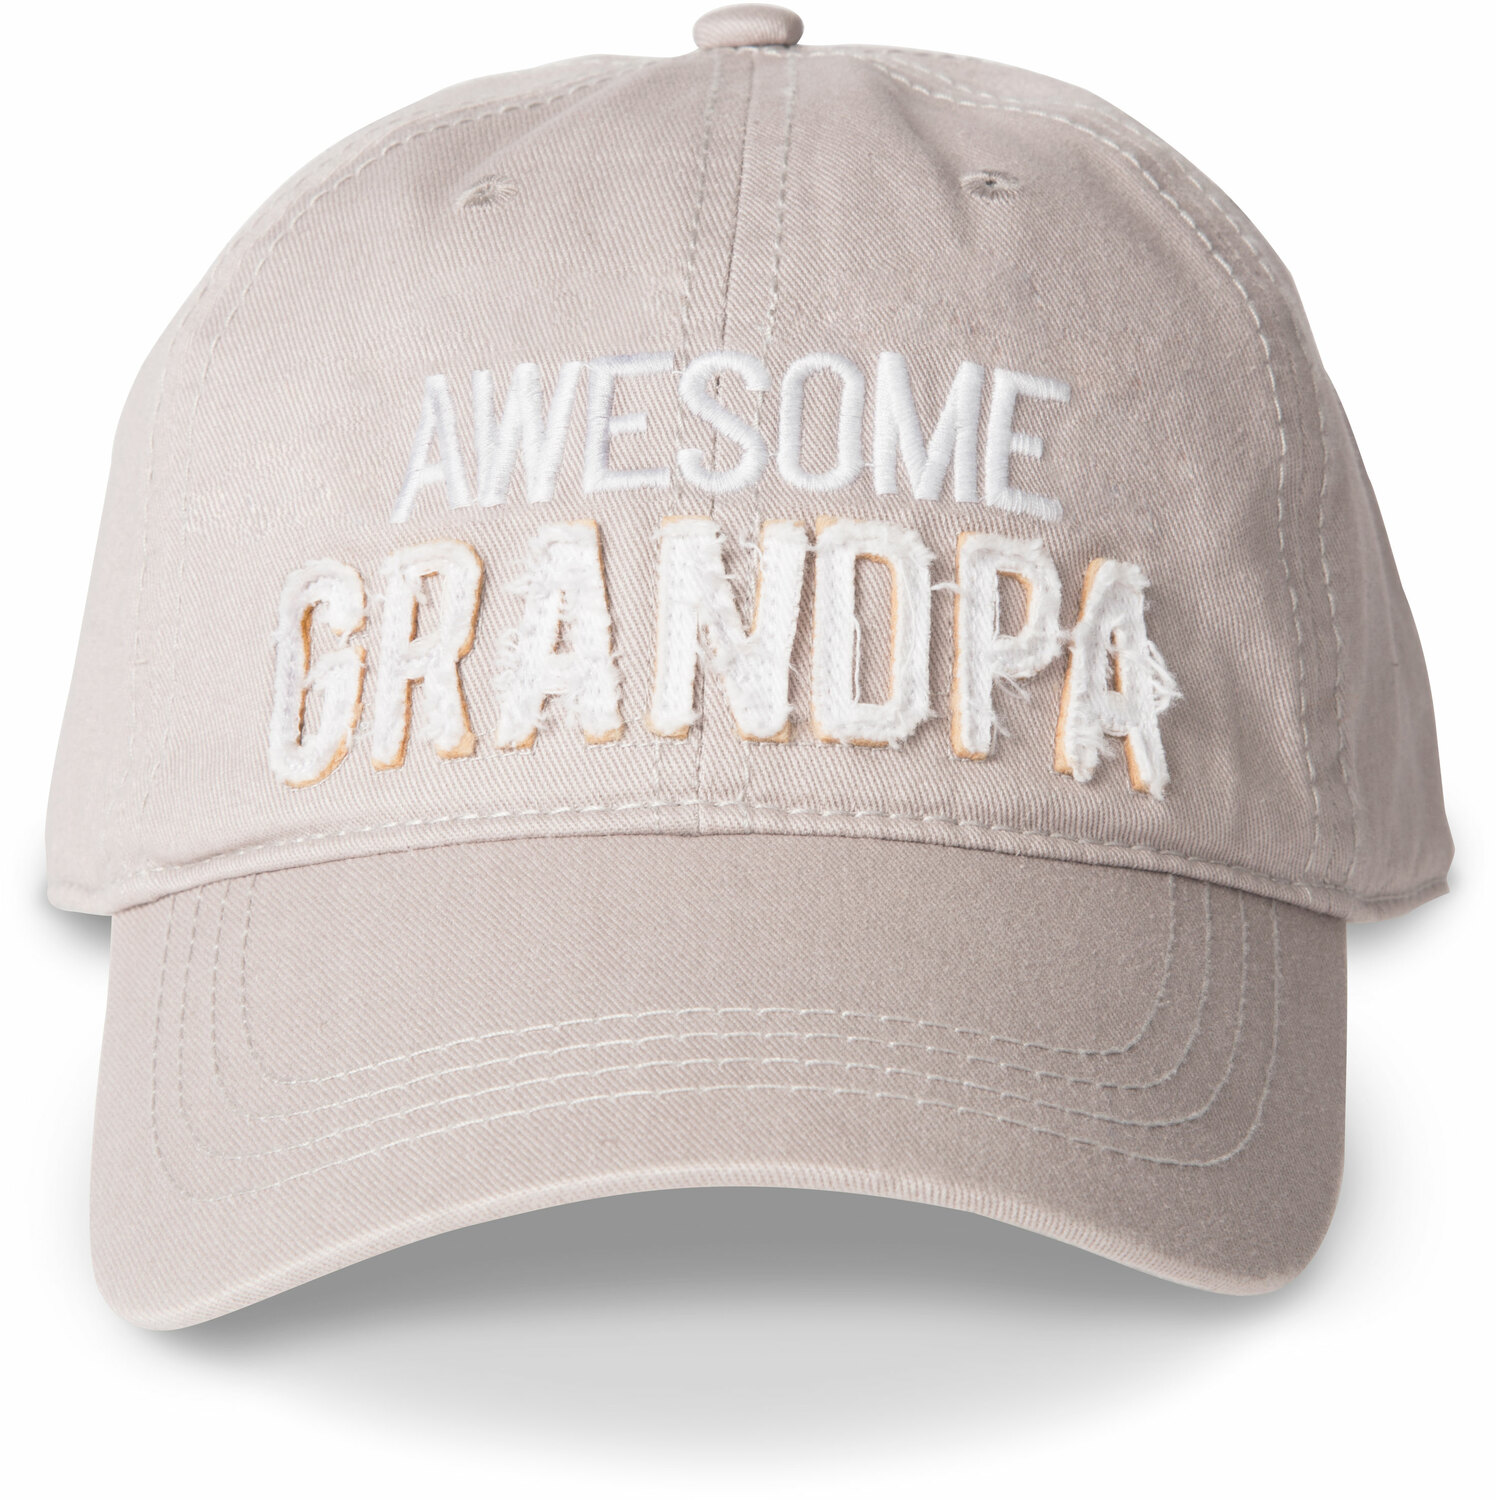 Grandpa by Man Made - Grandpa - Warm Gray Adjustable Hat